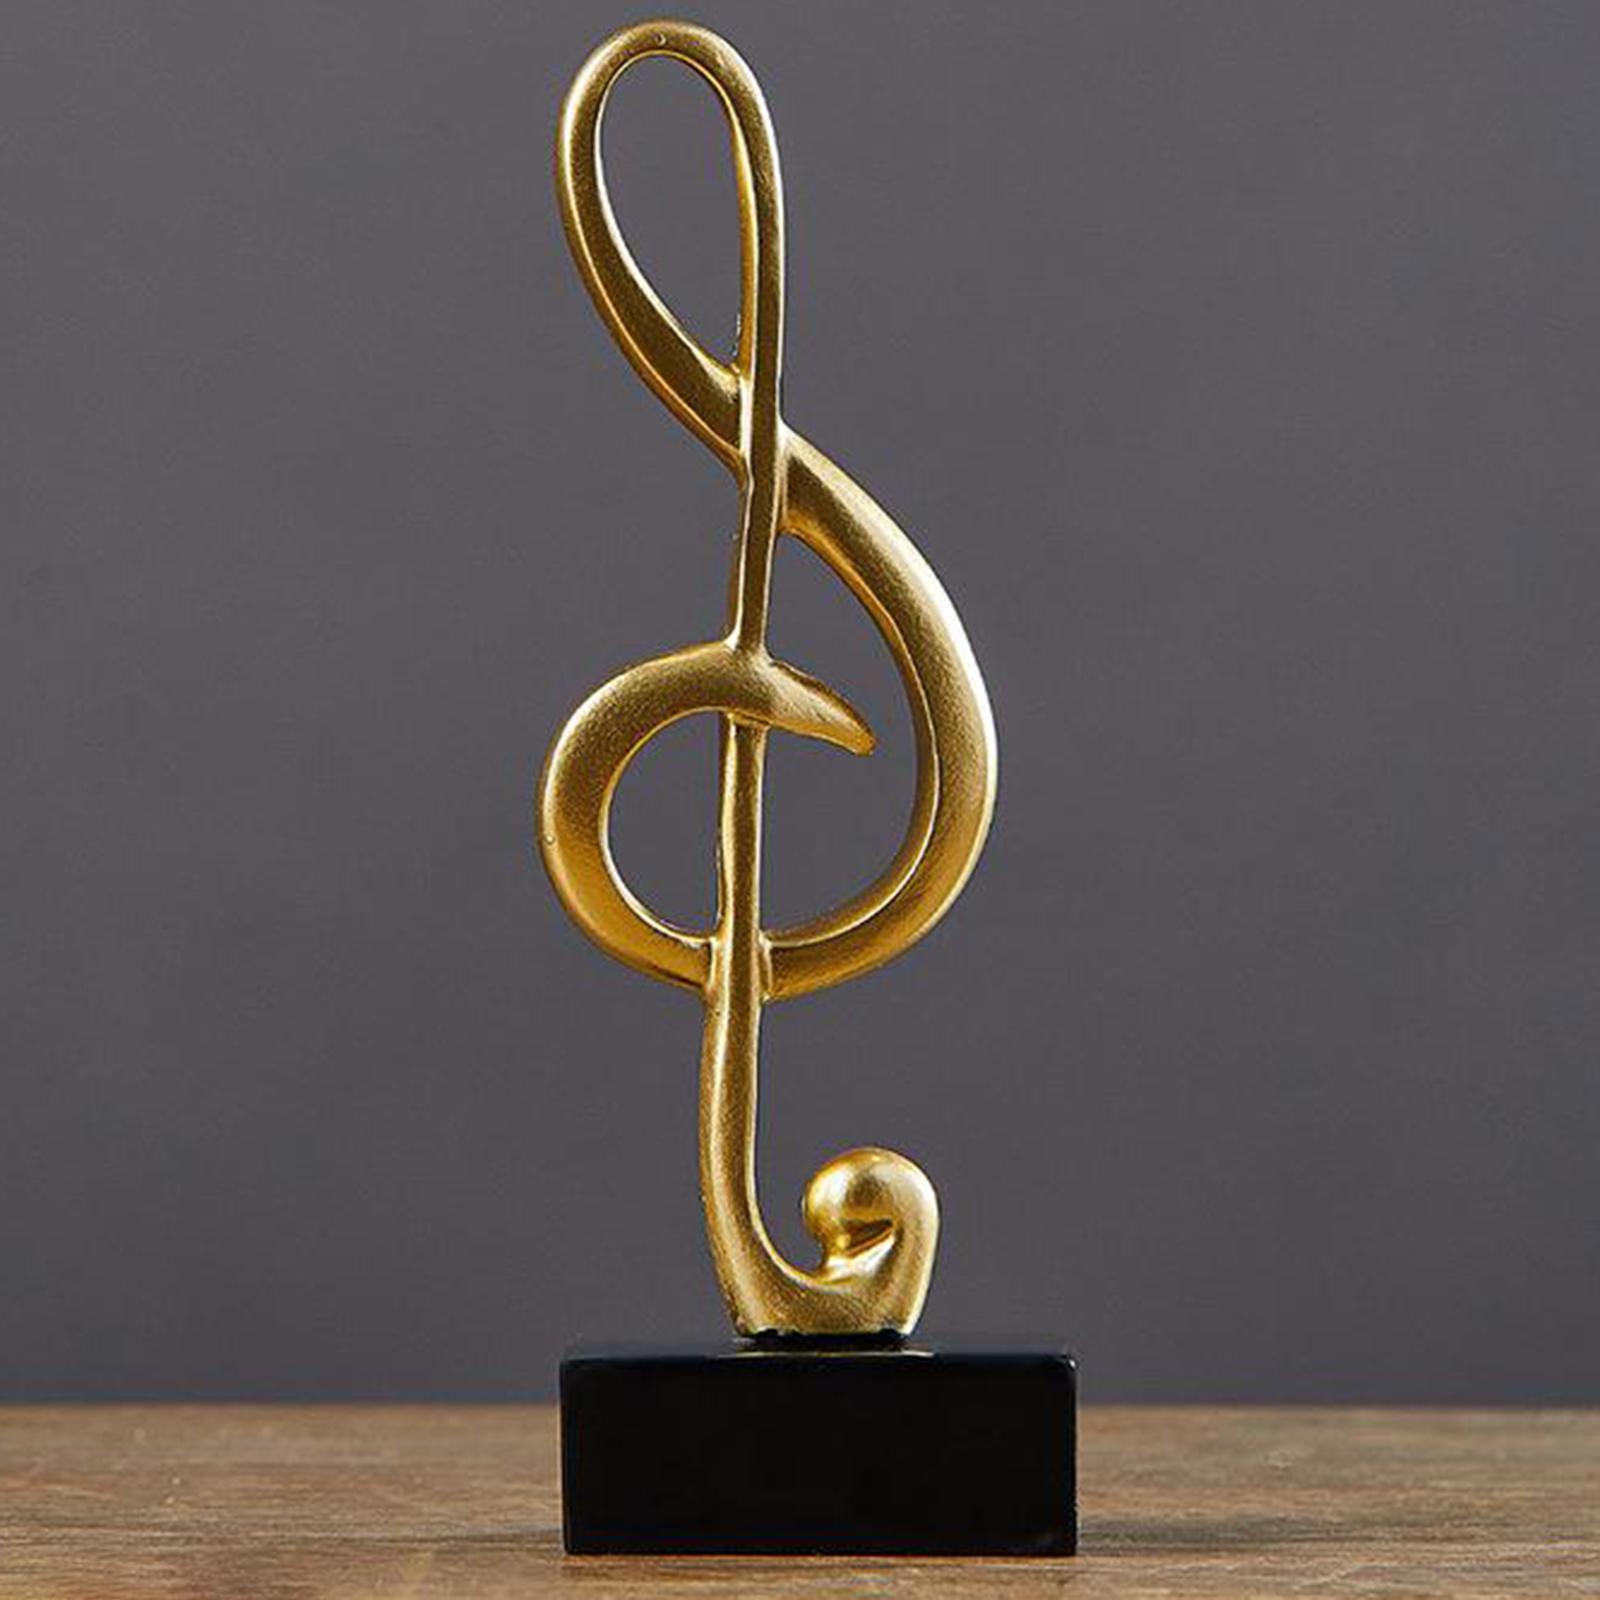 Music Sculpture Ornament Figurine Statue Photo Props Office Desktop